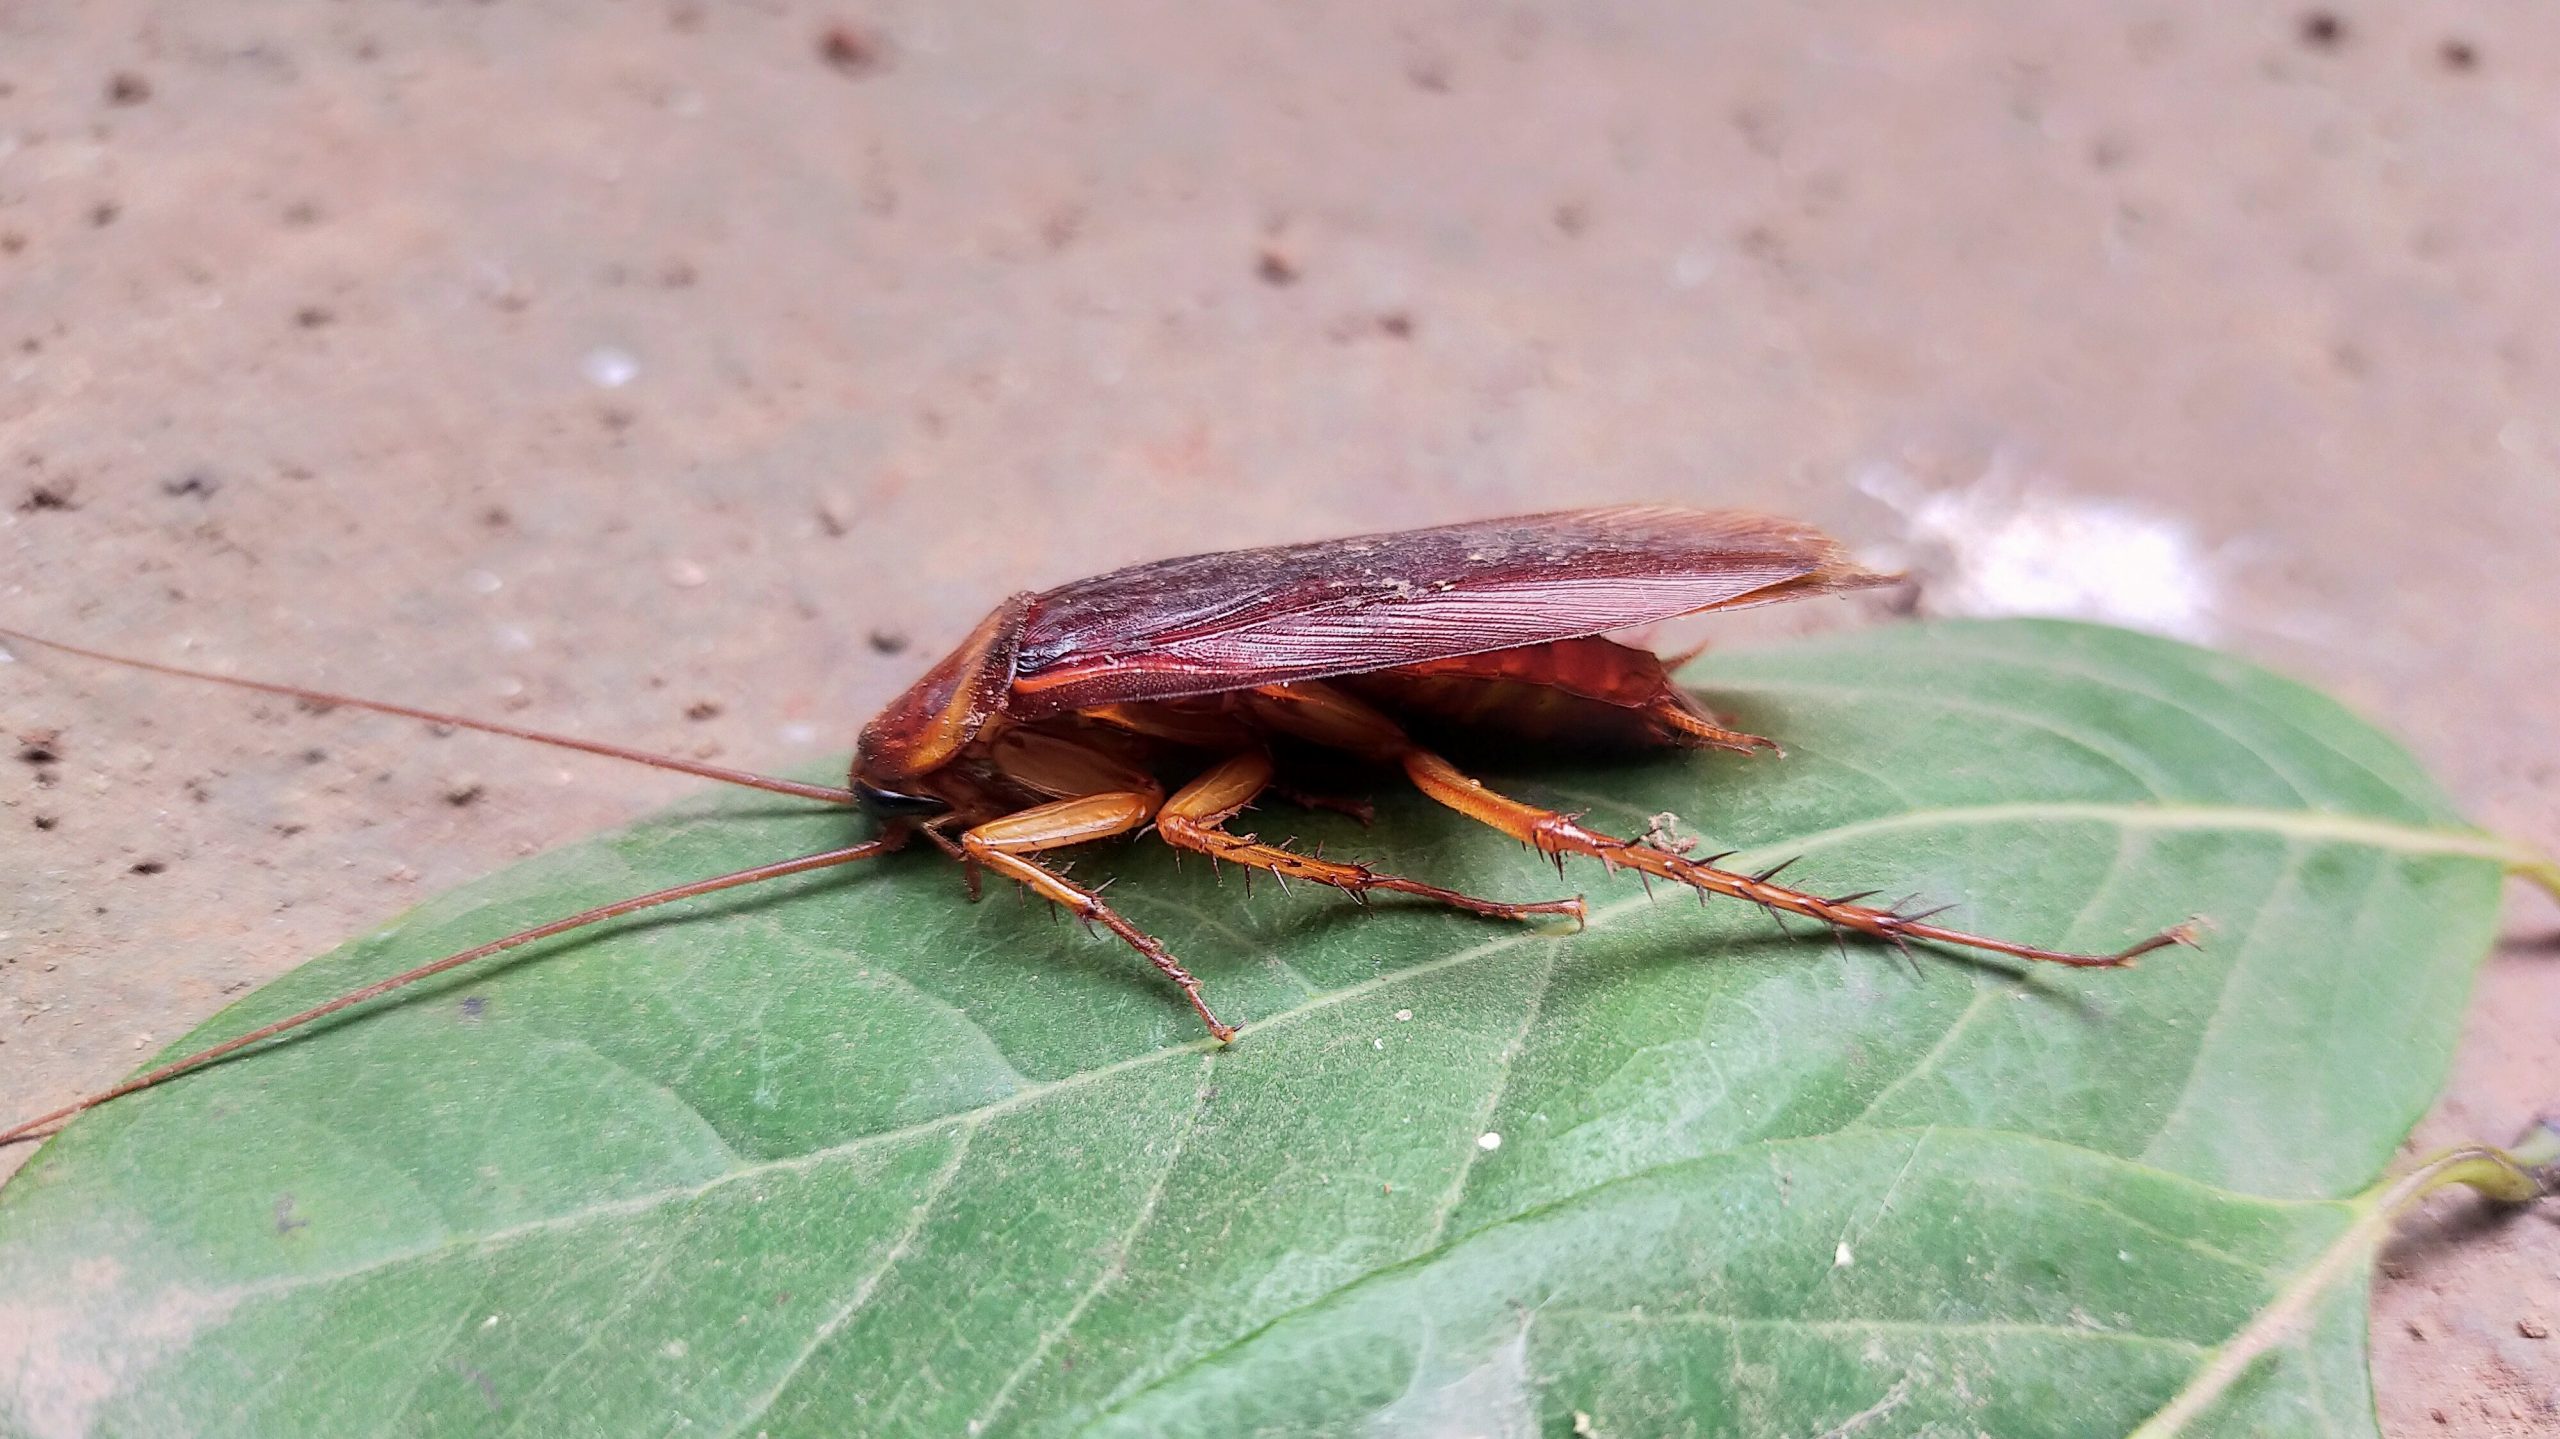 A Cockroach on leaf